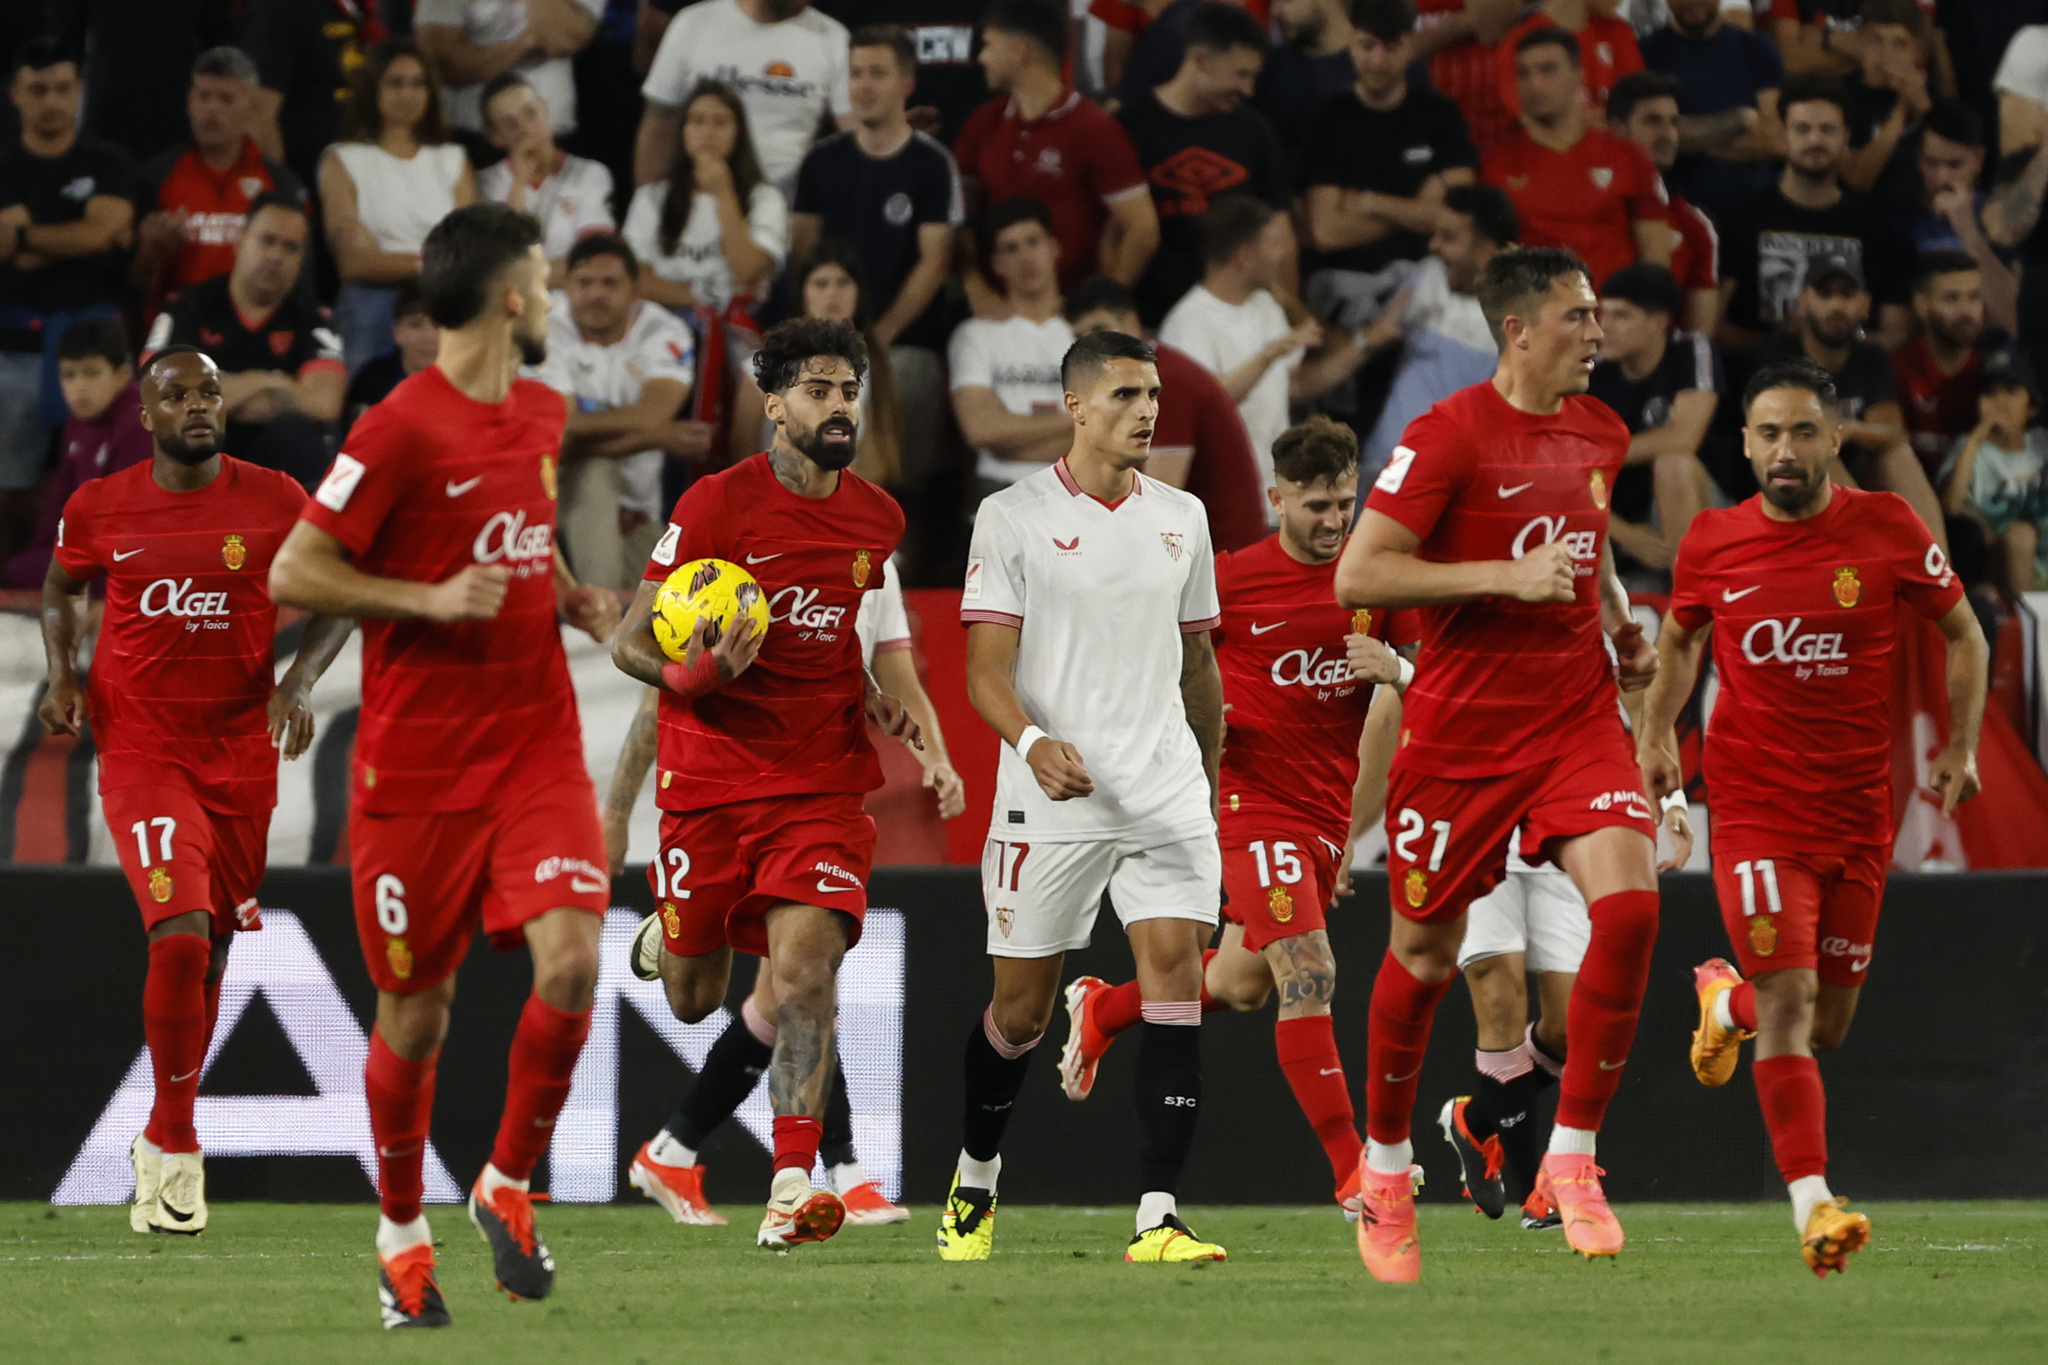 Los bermellones, tras el gol de Abdn al Sevilla.